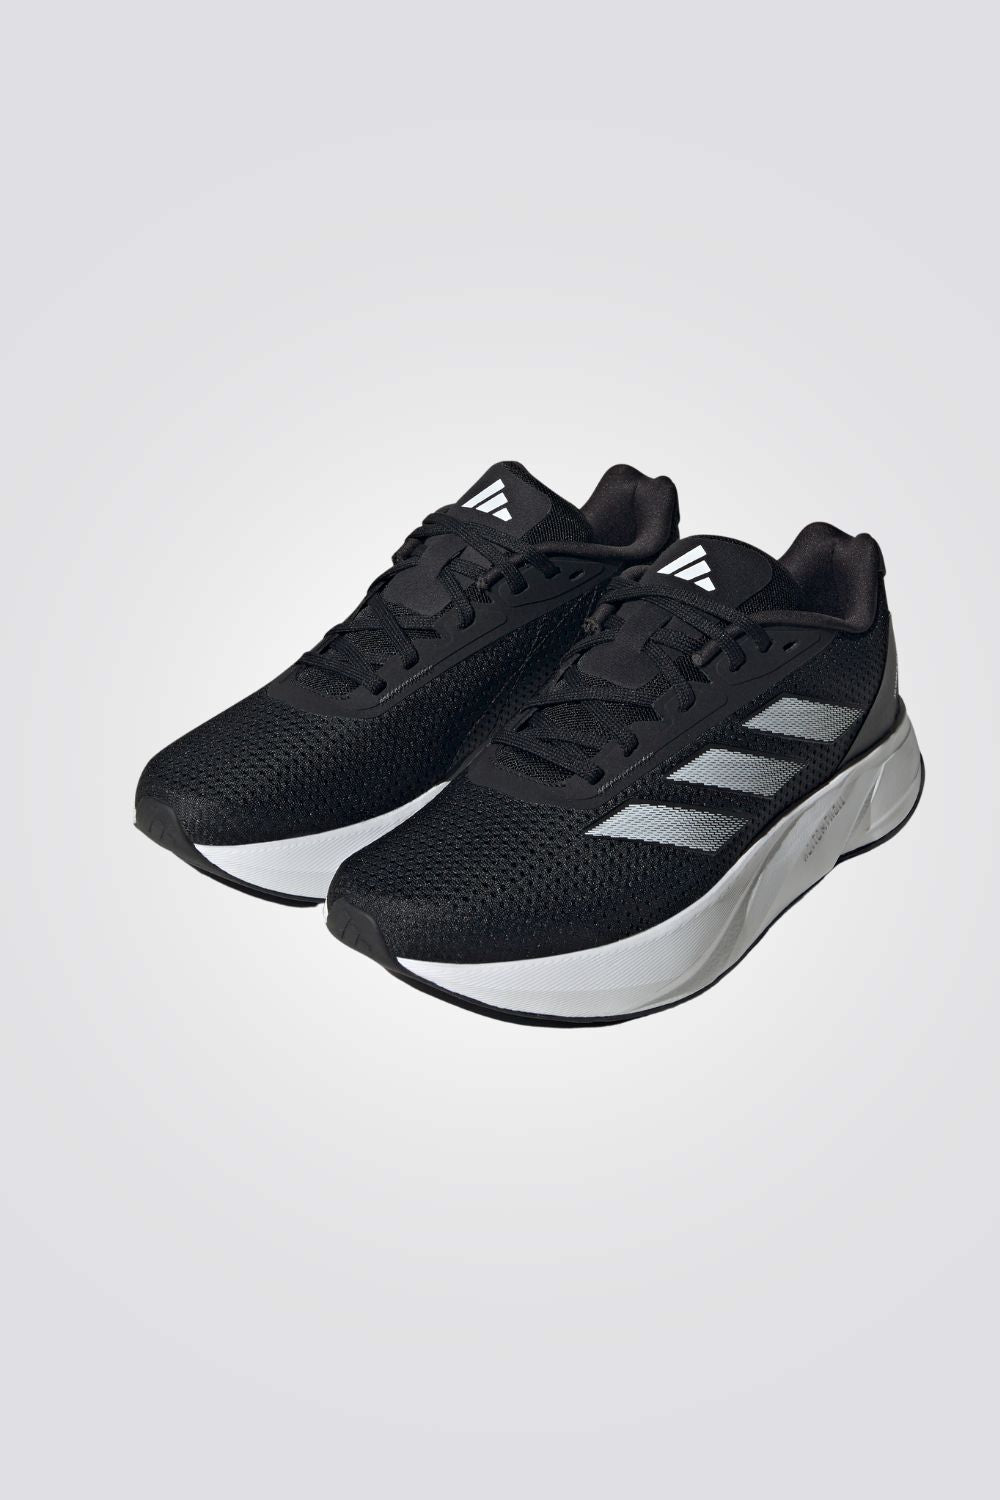 ADIDAS - נעלי ספורט לנשים DURAMO SL בצבע שחור ולבן - MASHBIR//365